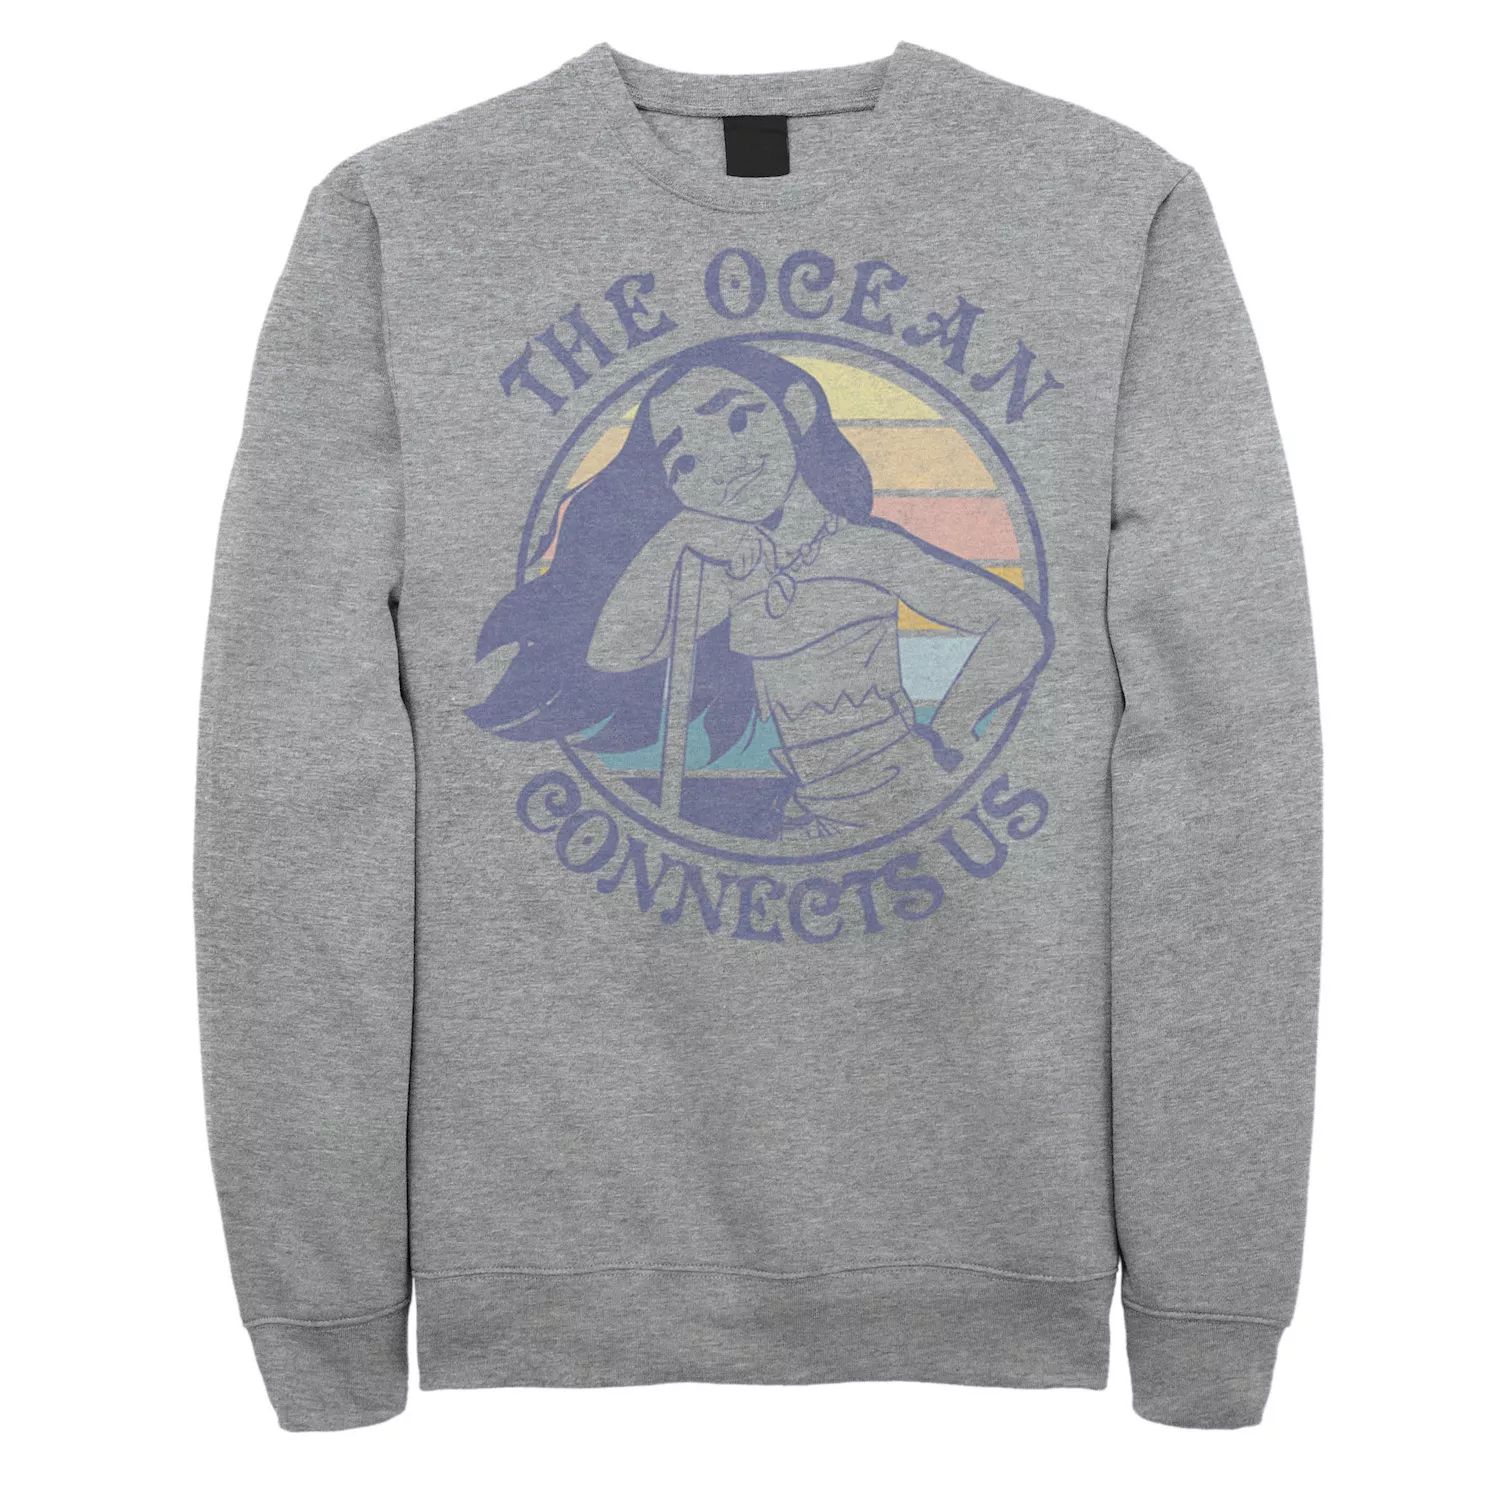 Мужская флисовая куртка Moana The Ocean Connects Us Sunset Disney футболка disney s moana boys 8–20 the ocean connects us с графическим рисунком кораллового цвета licensed character